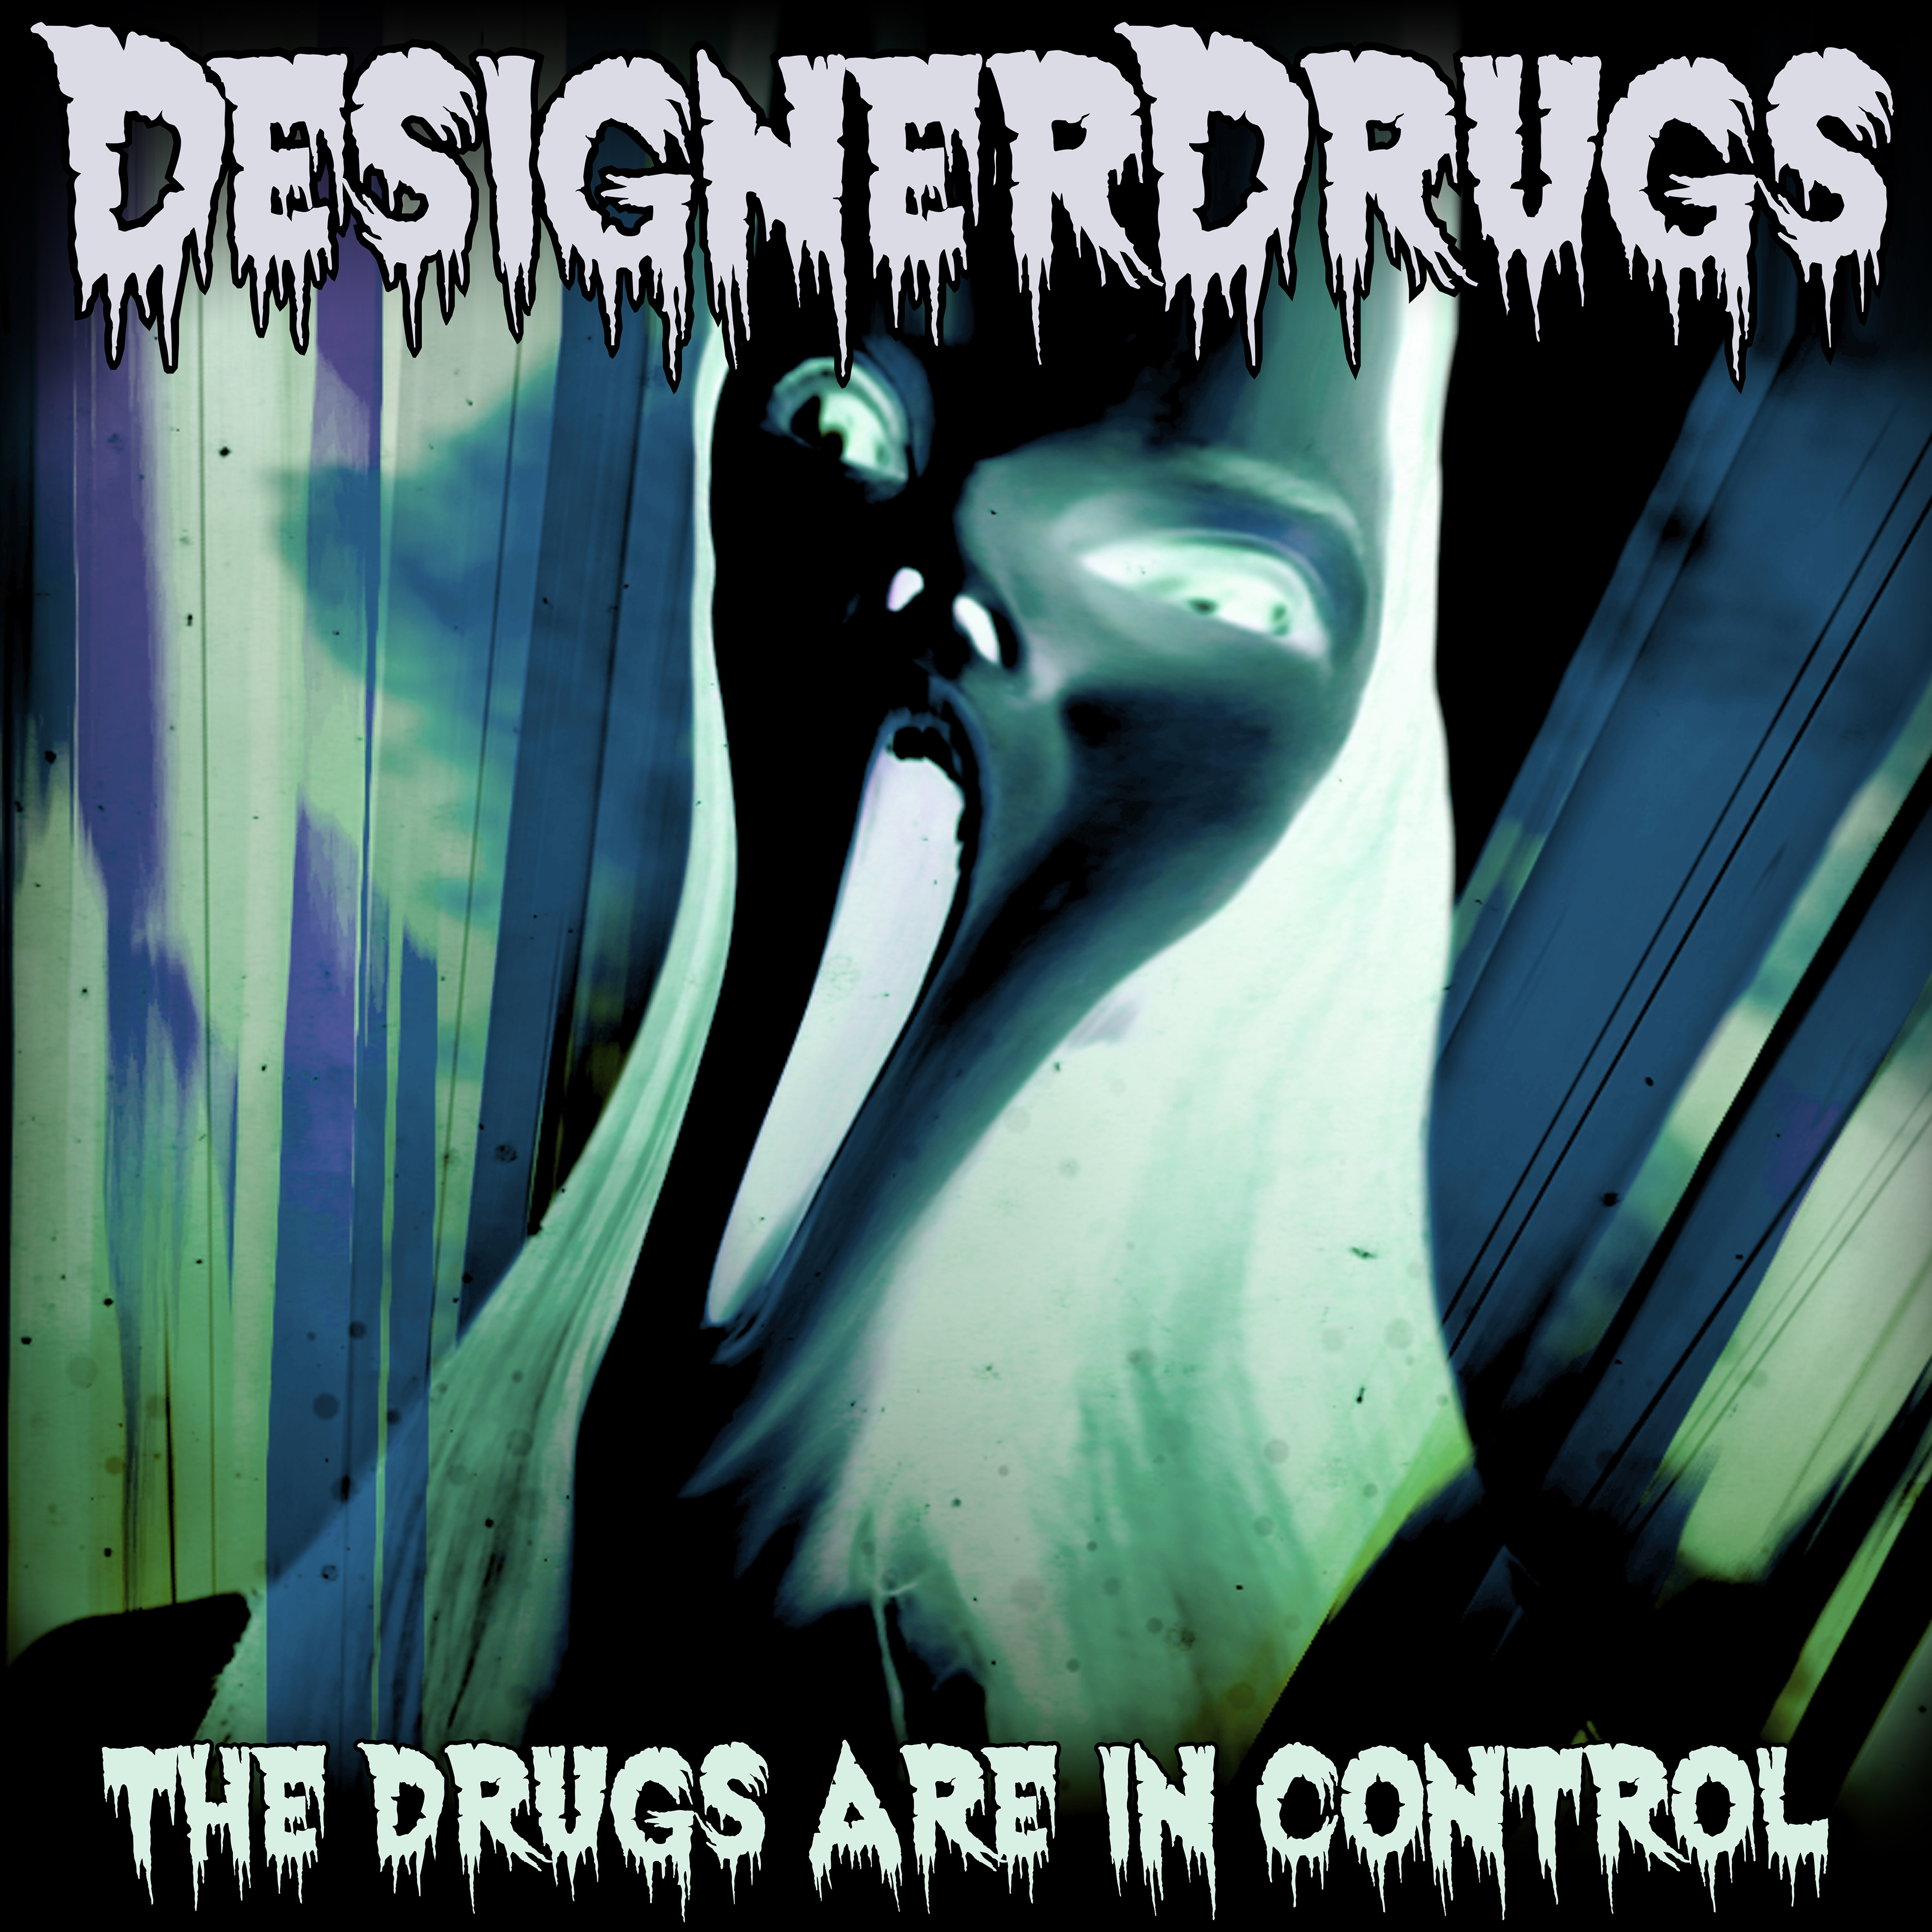 Designer Drugs Announce New Album “The Drugs Are In Control”